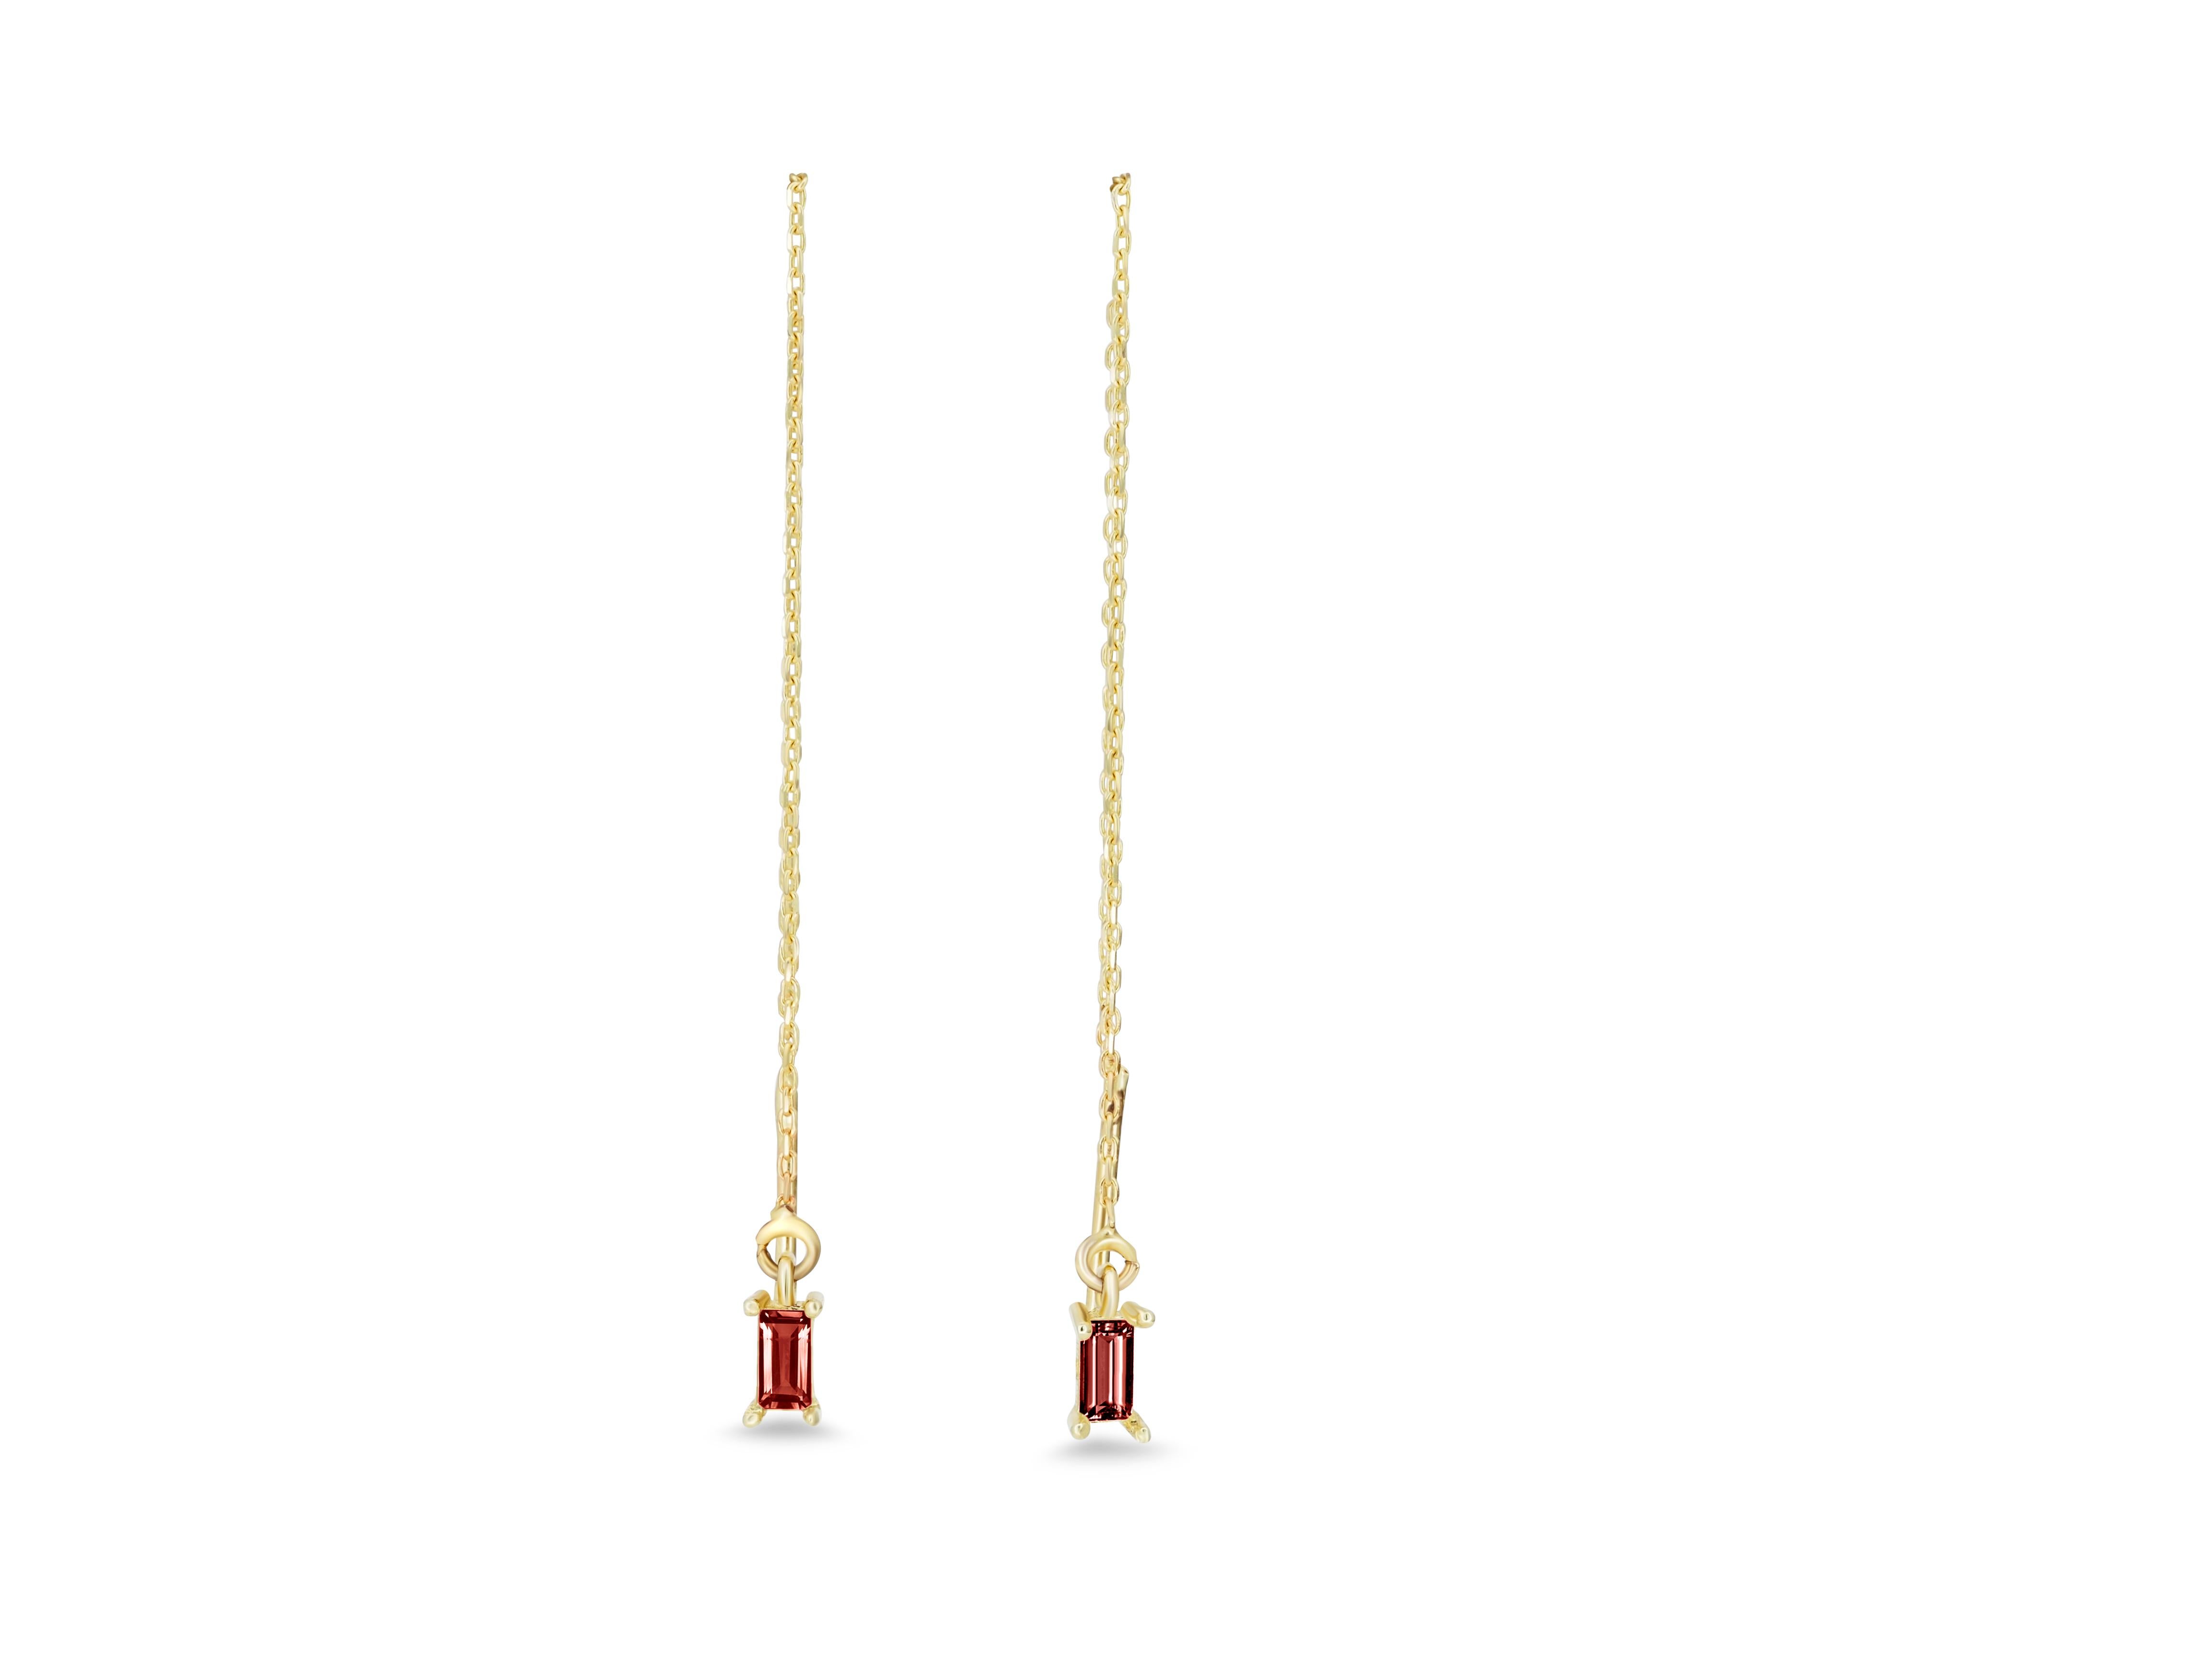 Baguette Cut 14k solid gold drop earrings with garnets.  For Sale